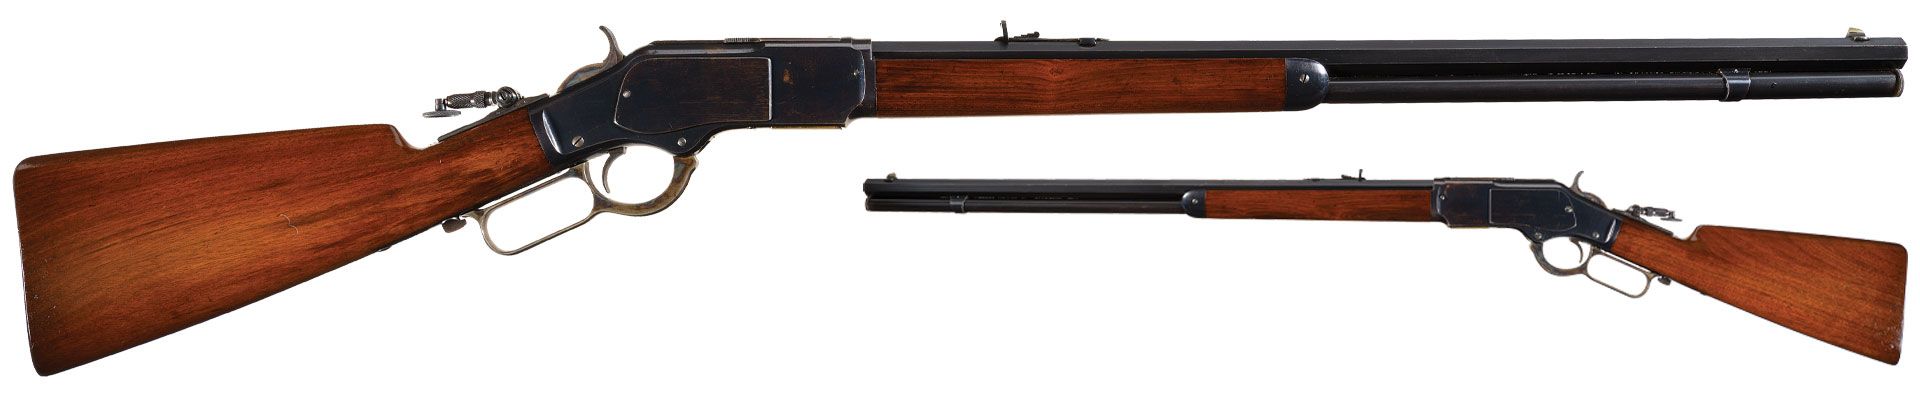 Lot 3053: Special Order Winchester Model 1873 .22 Rimfire Rifle